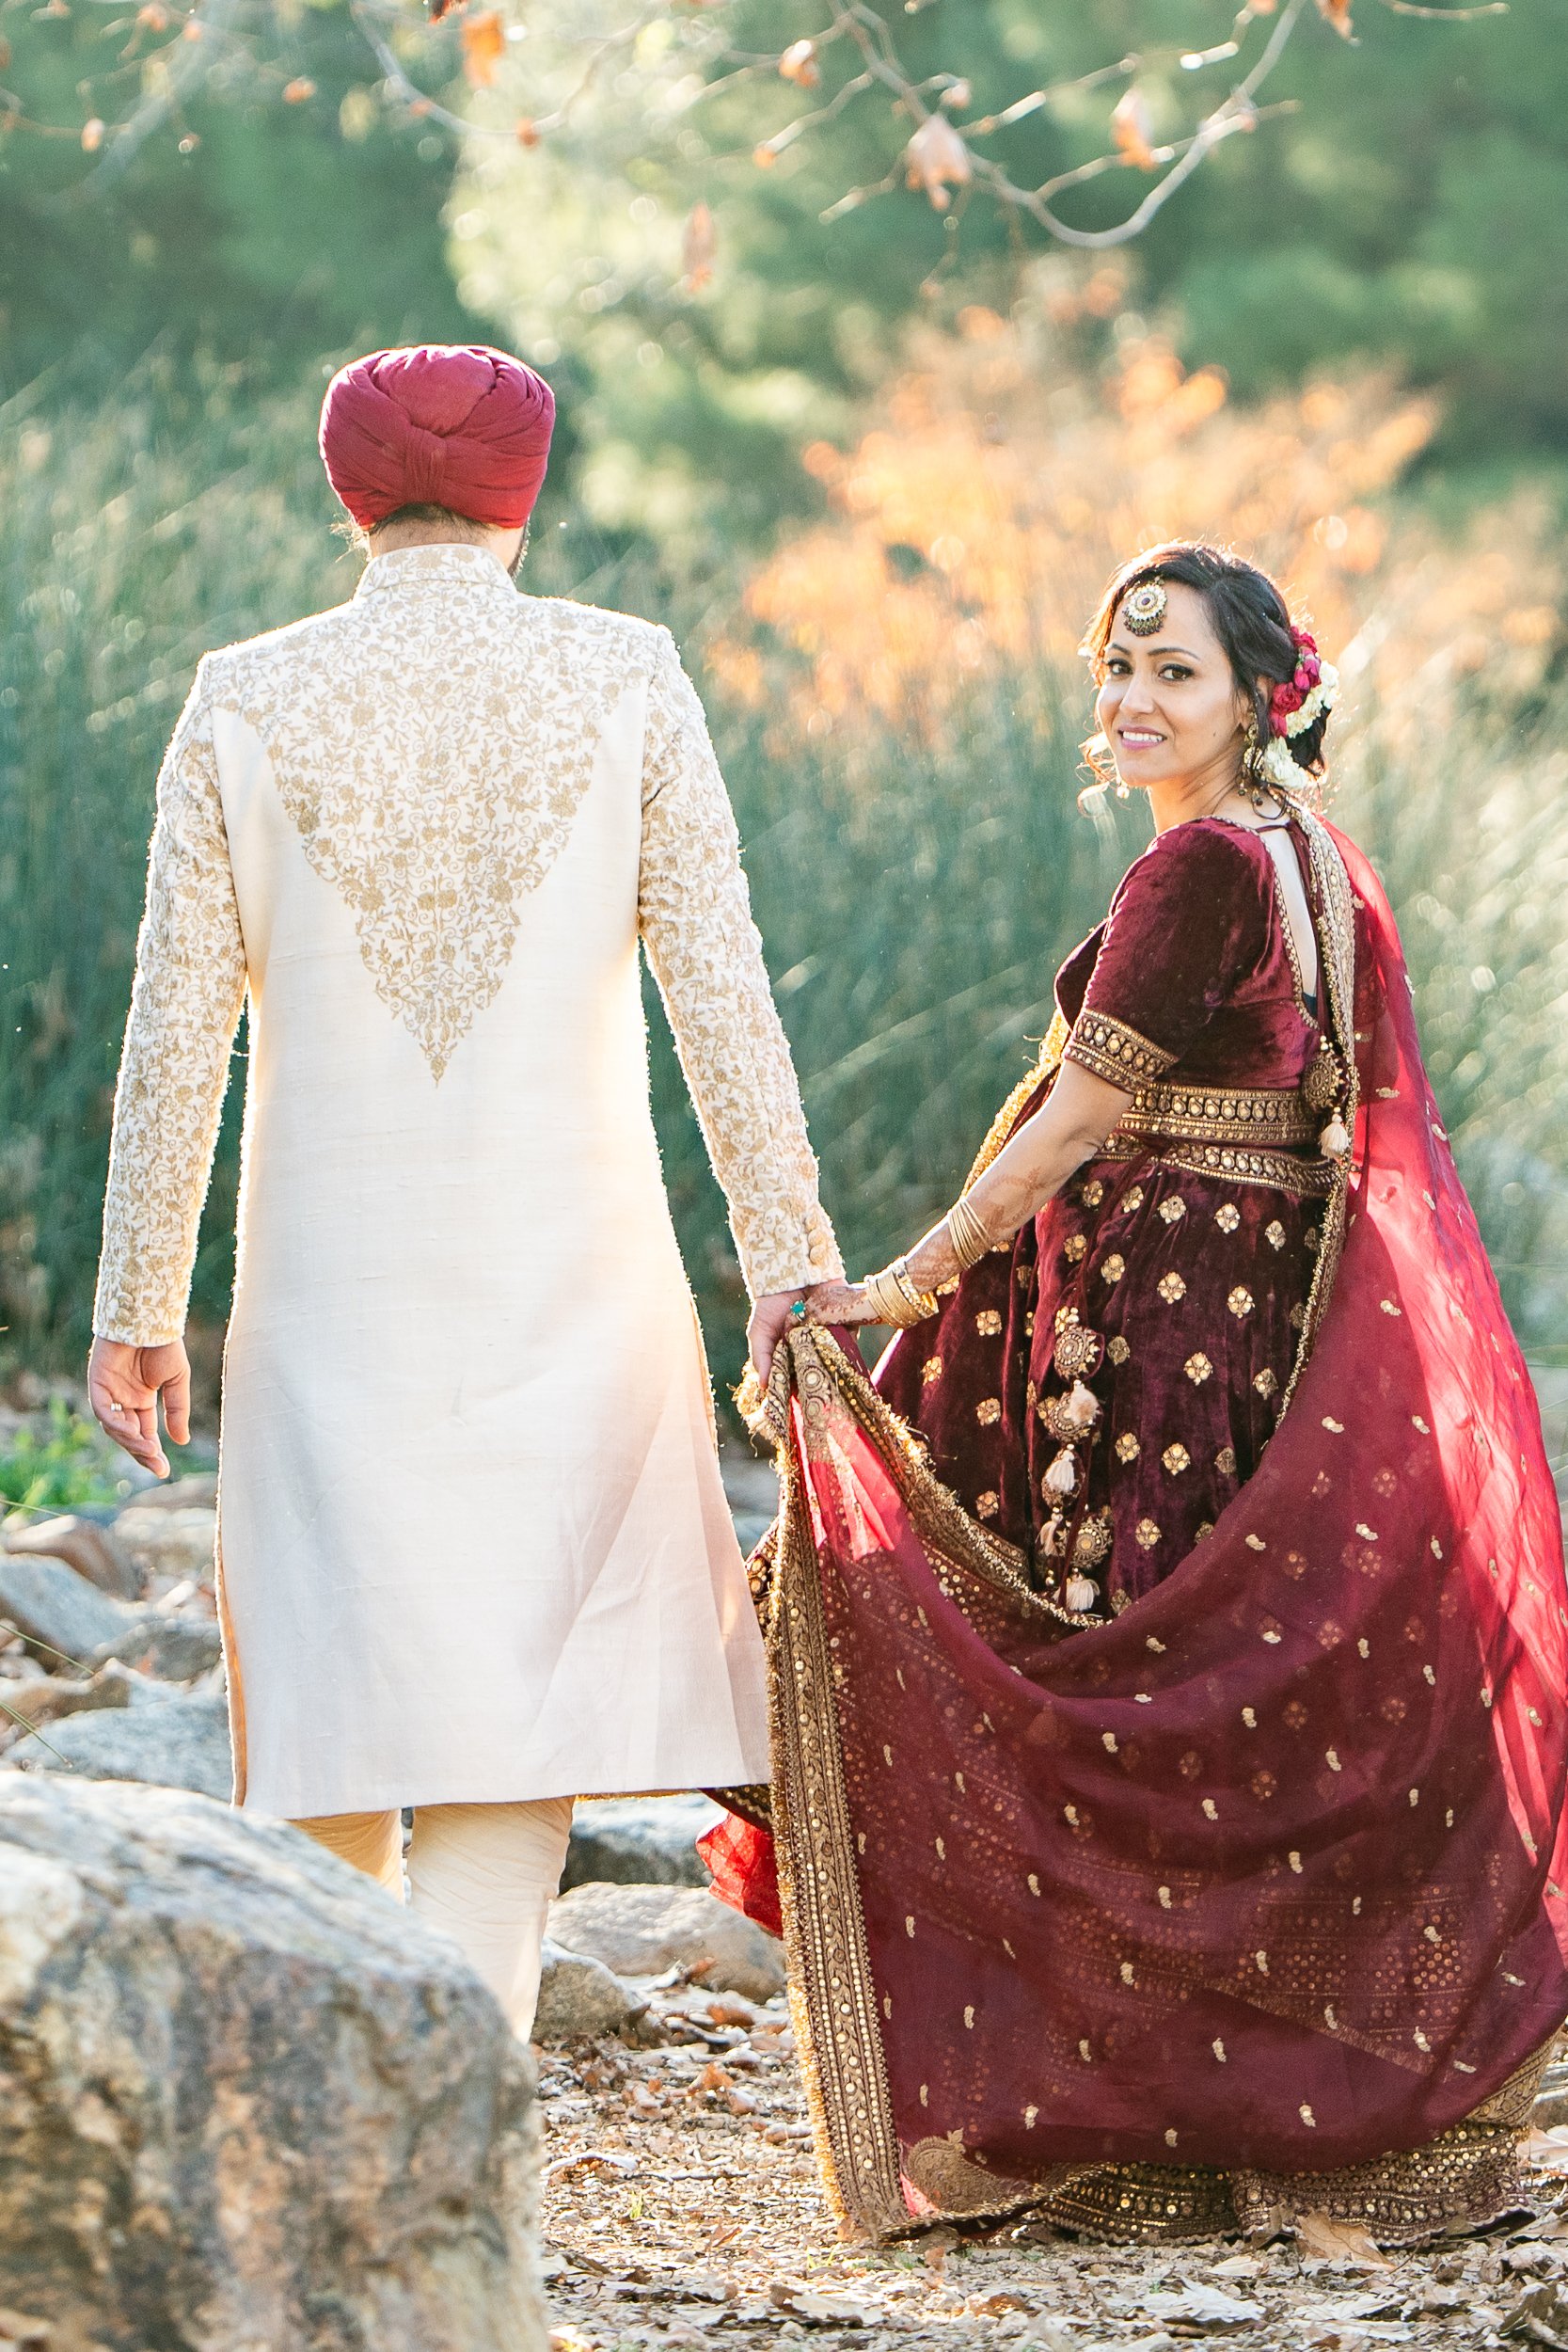 Hyatt Regency Irvine Indian Wedding Photos-5.jpg